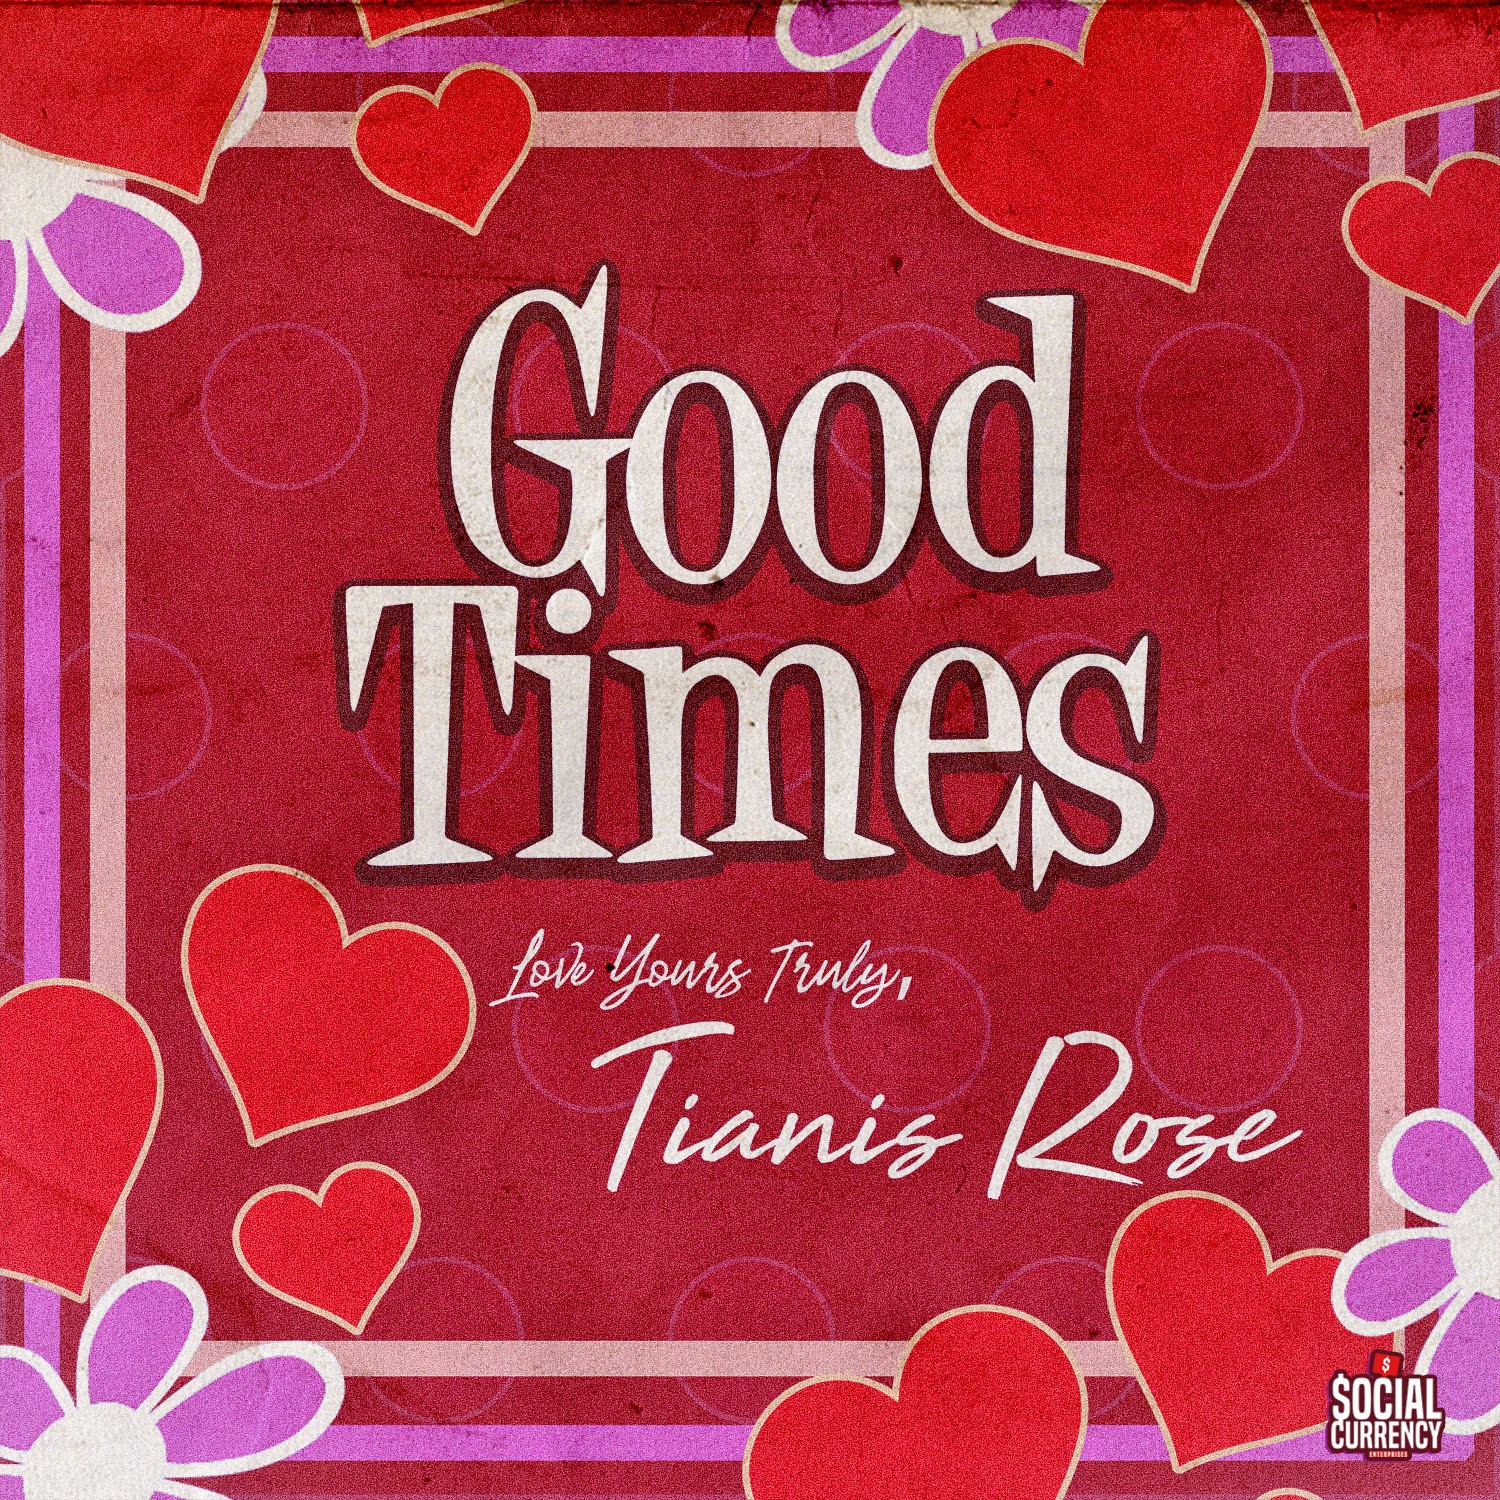 Tianis Rose - Good Times 1